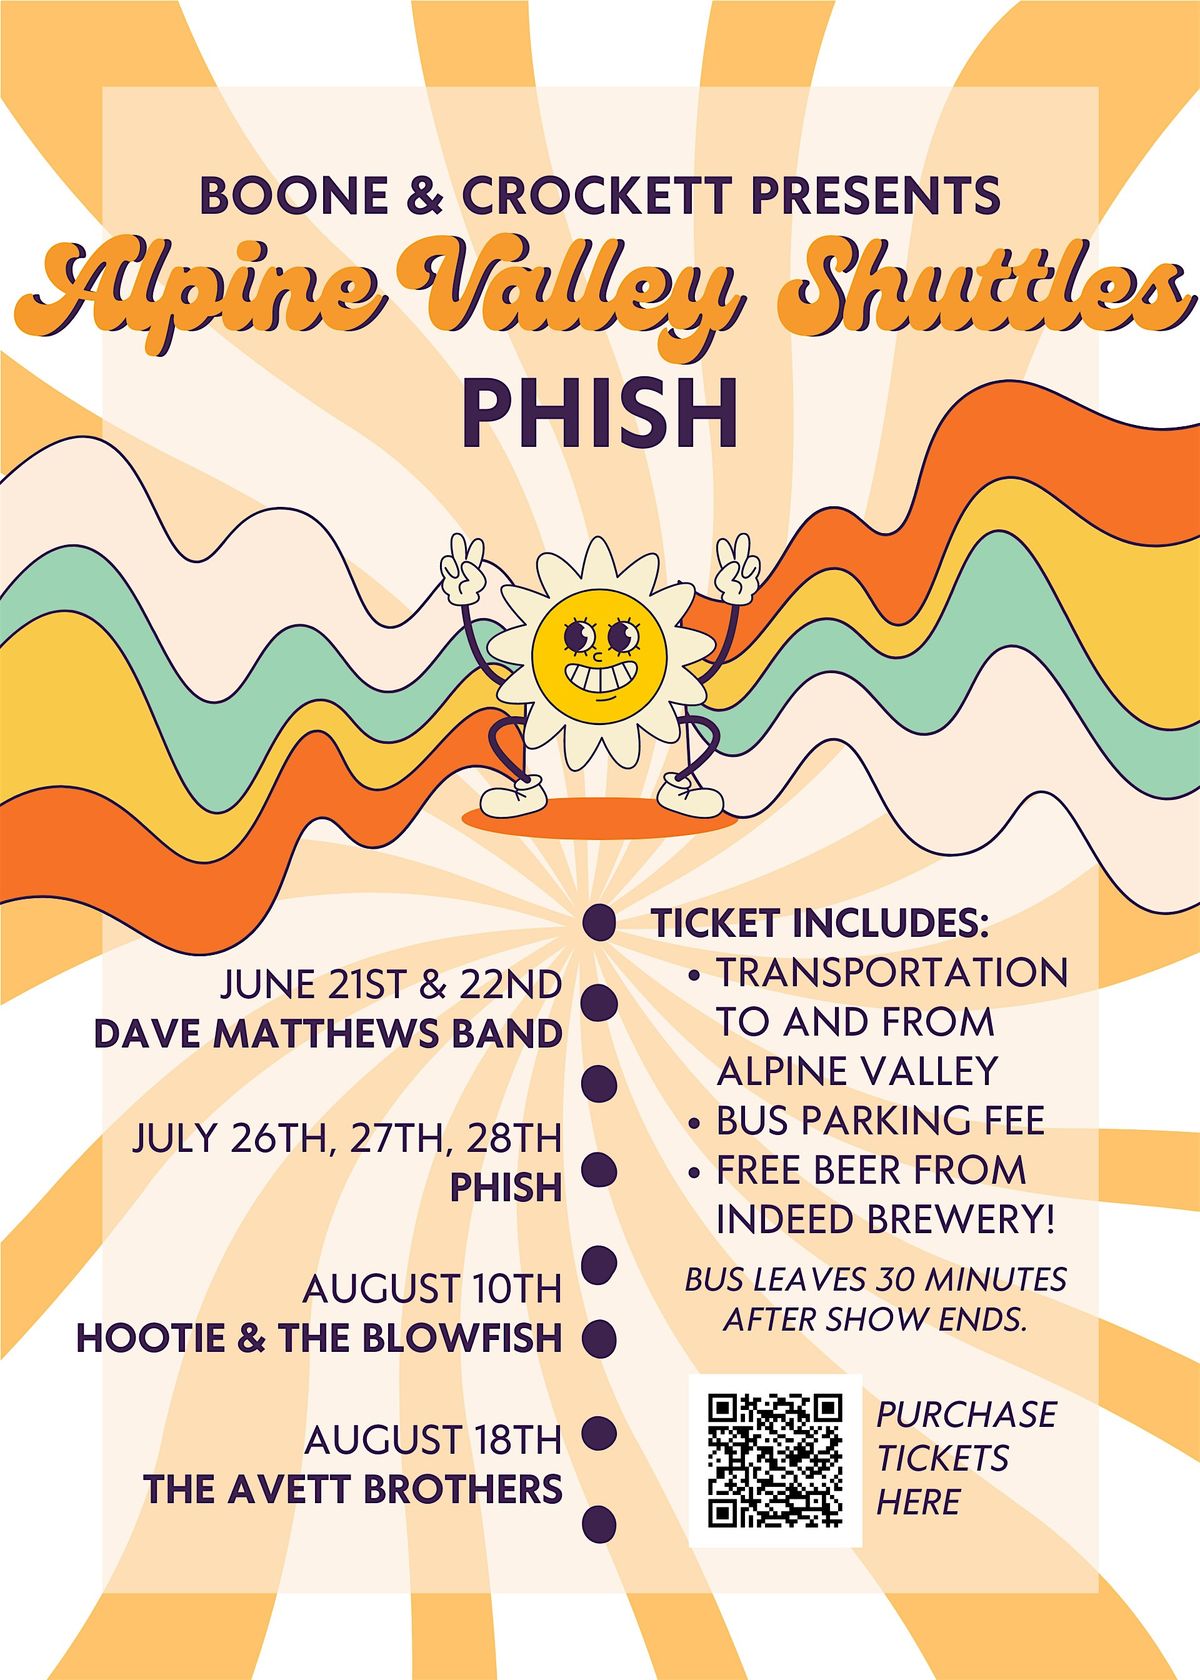 Alpine Valley Shuttle to PHISH - SUNDAY